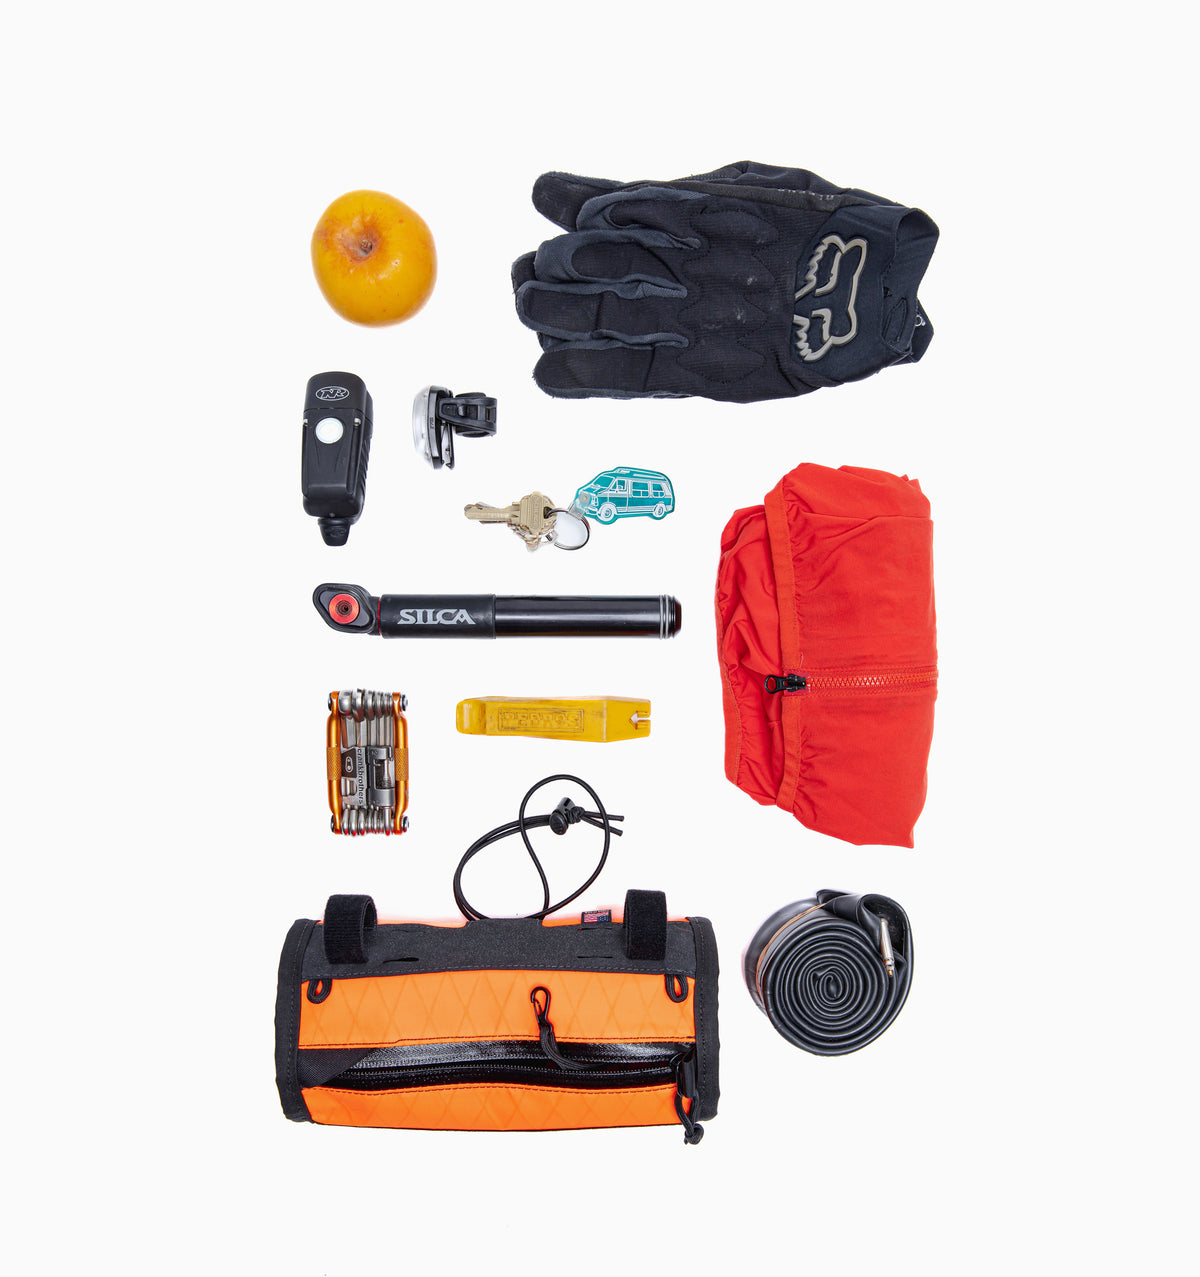 Mission Workshop Toro Weatherproof Handlebar Bag 1.7L - Black Camo